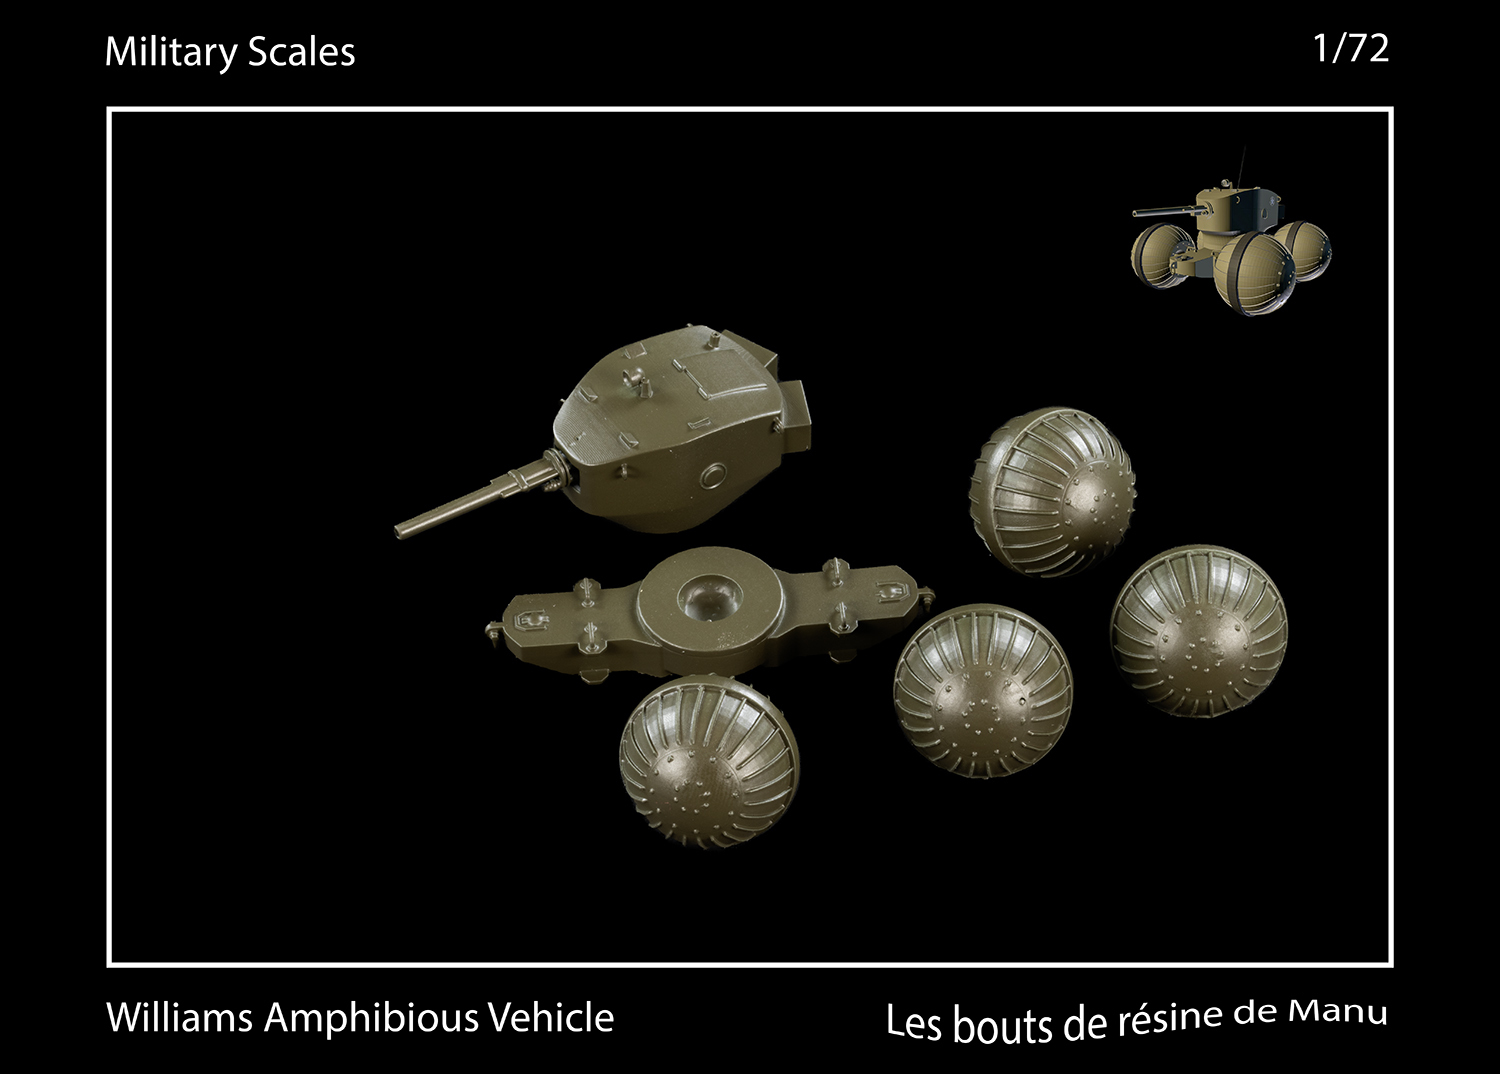 [Military Scales] Williams Amphibious Vehicle - MAJ 10/03 Upxp